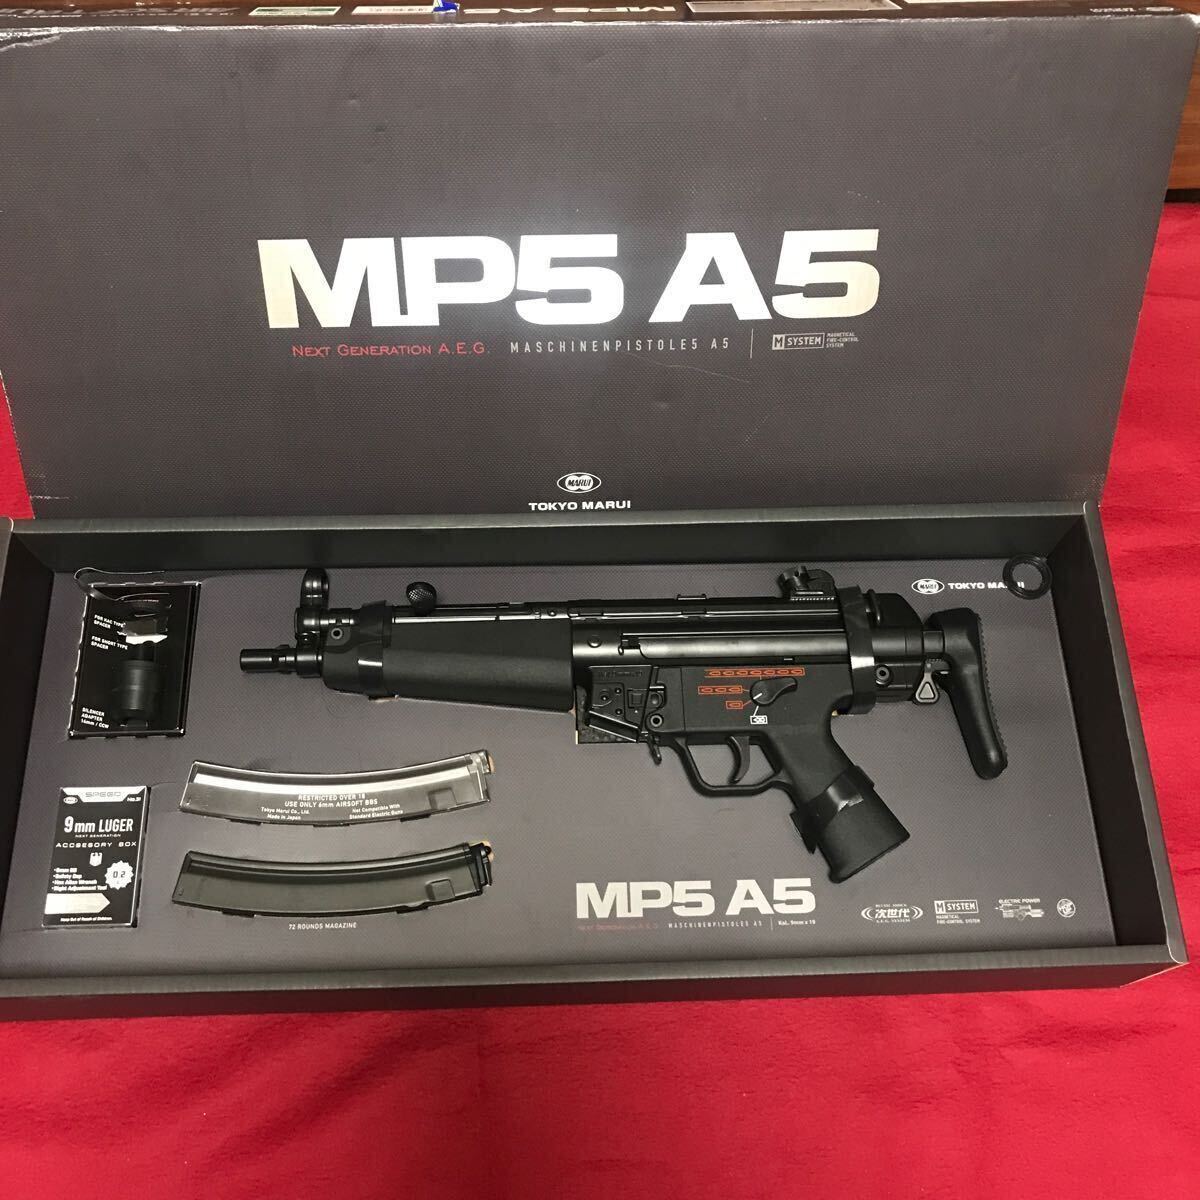  round next generation MP5A5